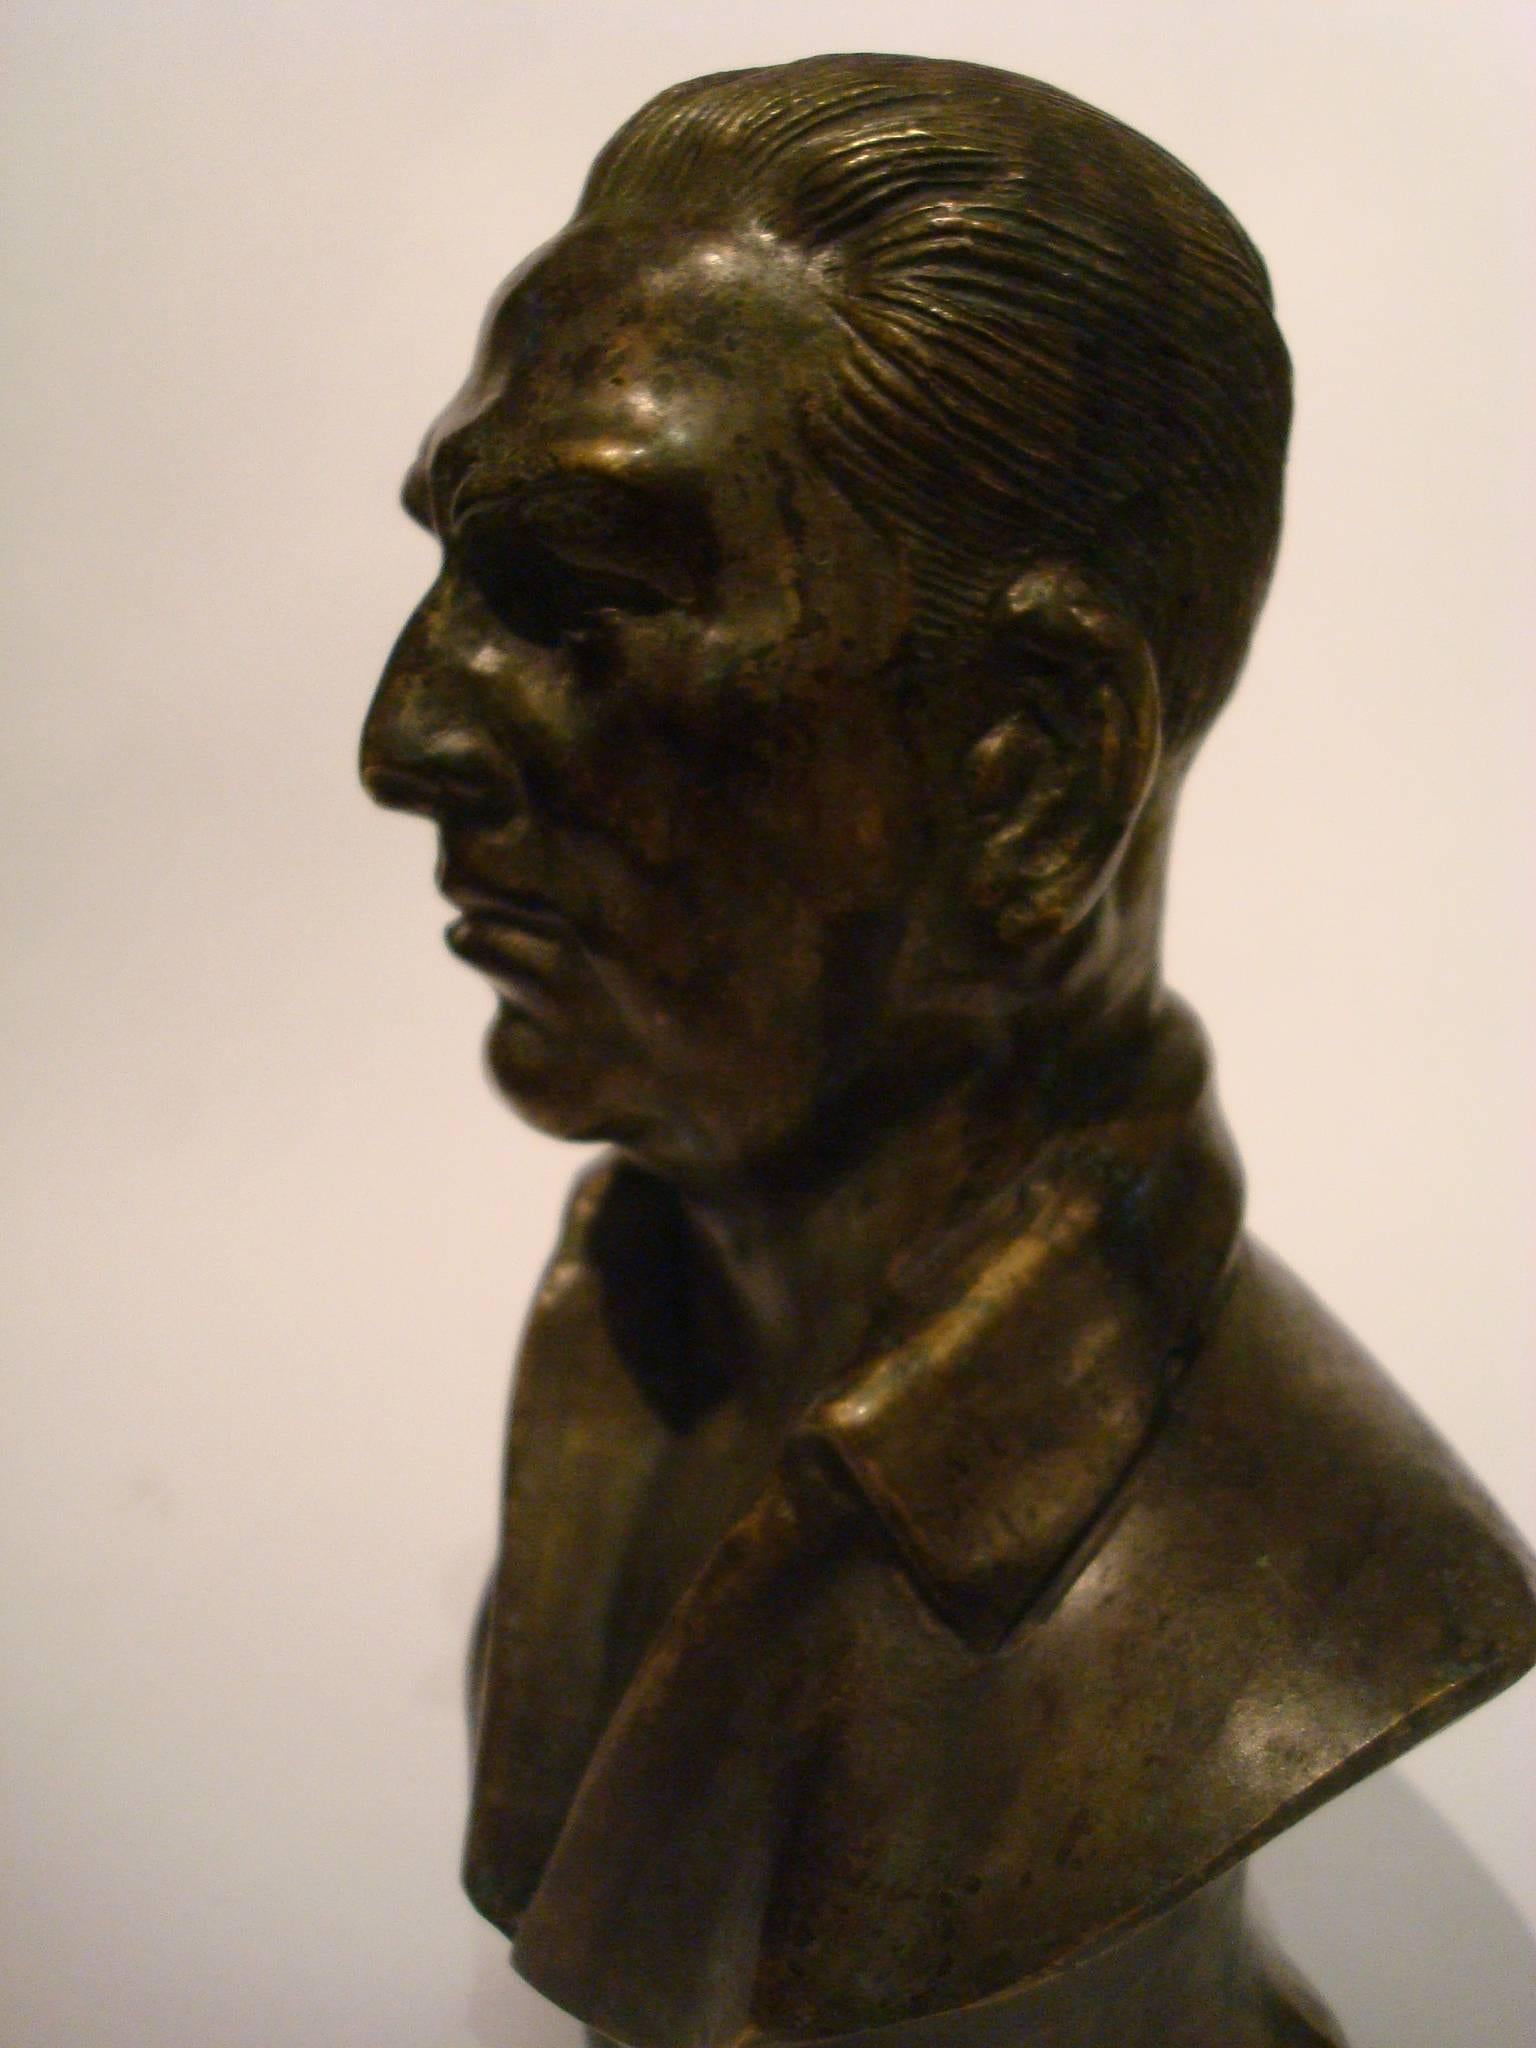 President of Argentina General Juan Domingo Peron Bronze Bust, Evita Peron was his wife. Very nice bronze desk piece, circa 1950. Numbered 17 of 50.